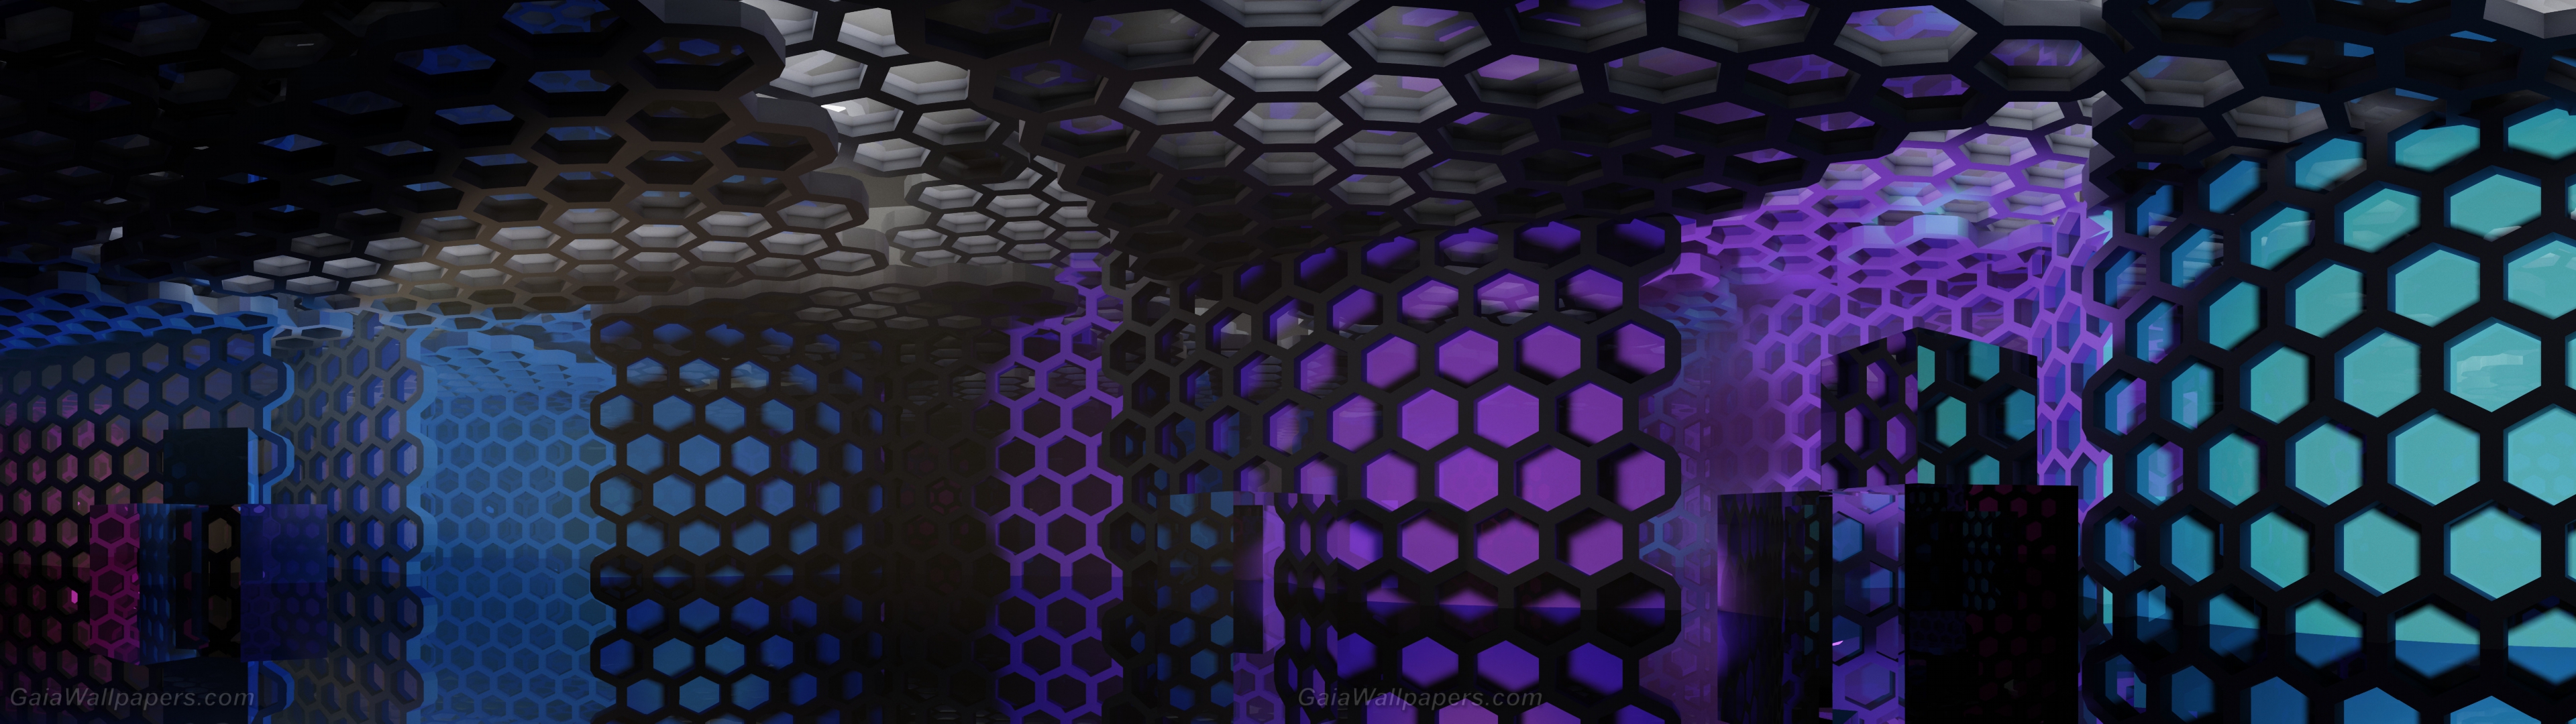 High-tech alien corridors - Free desktop wallpapers